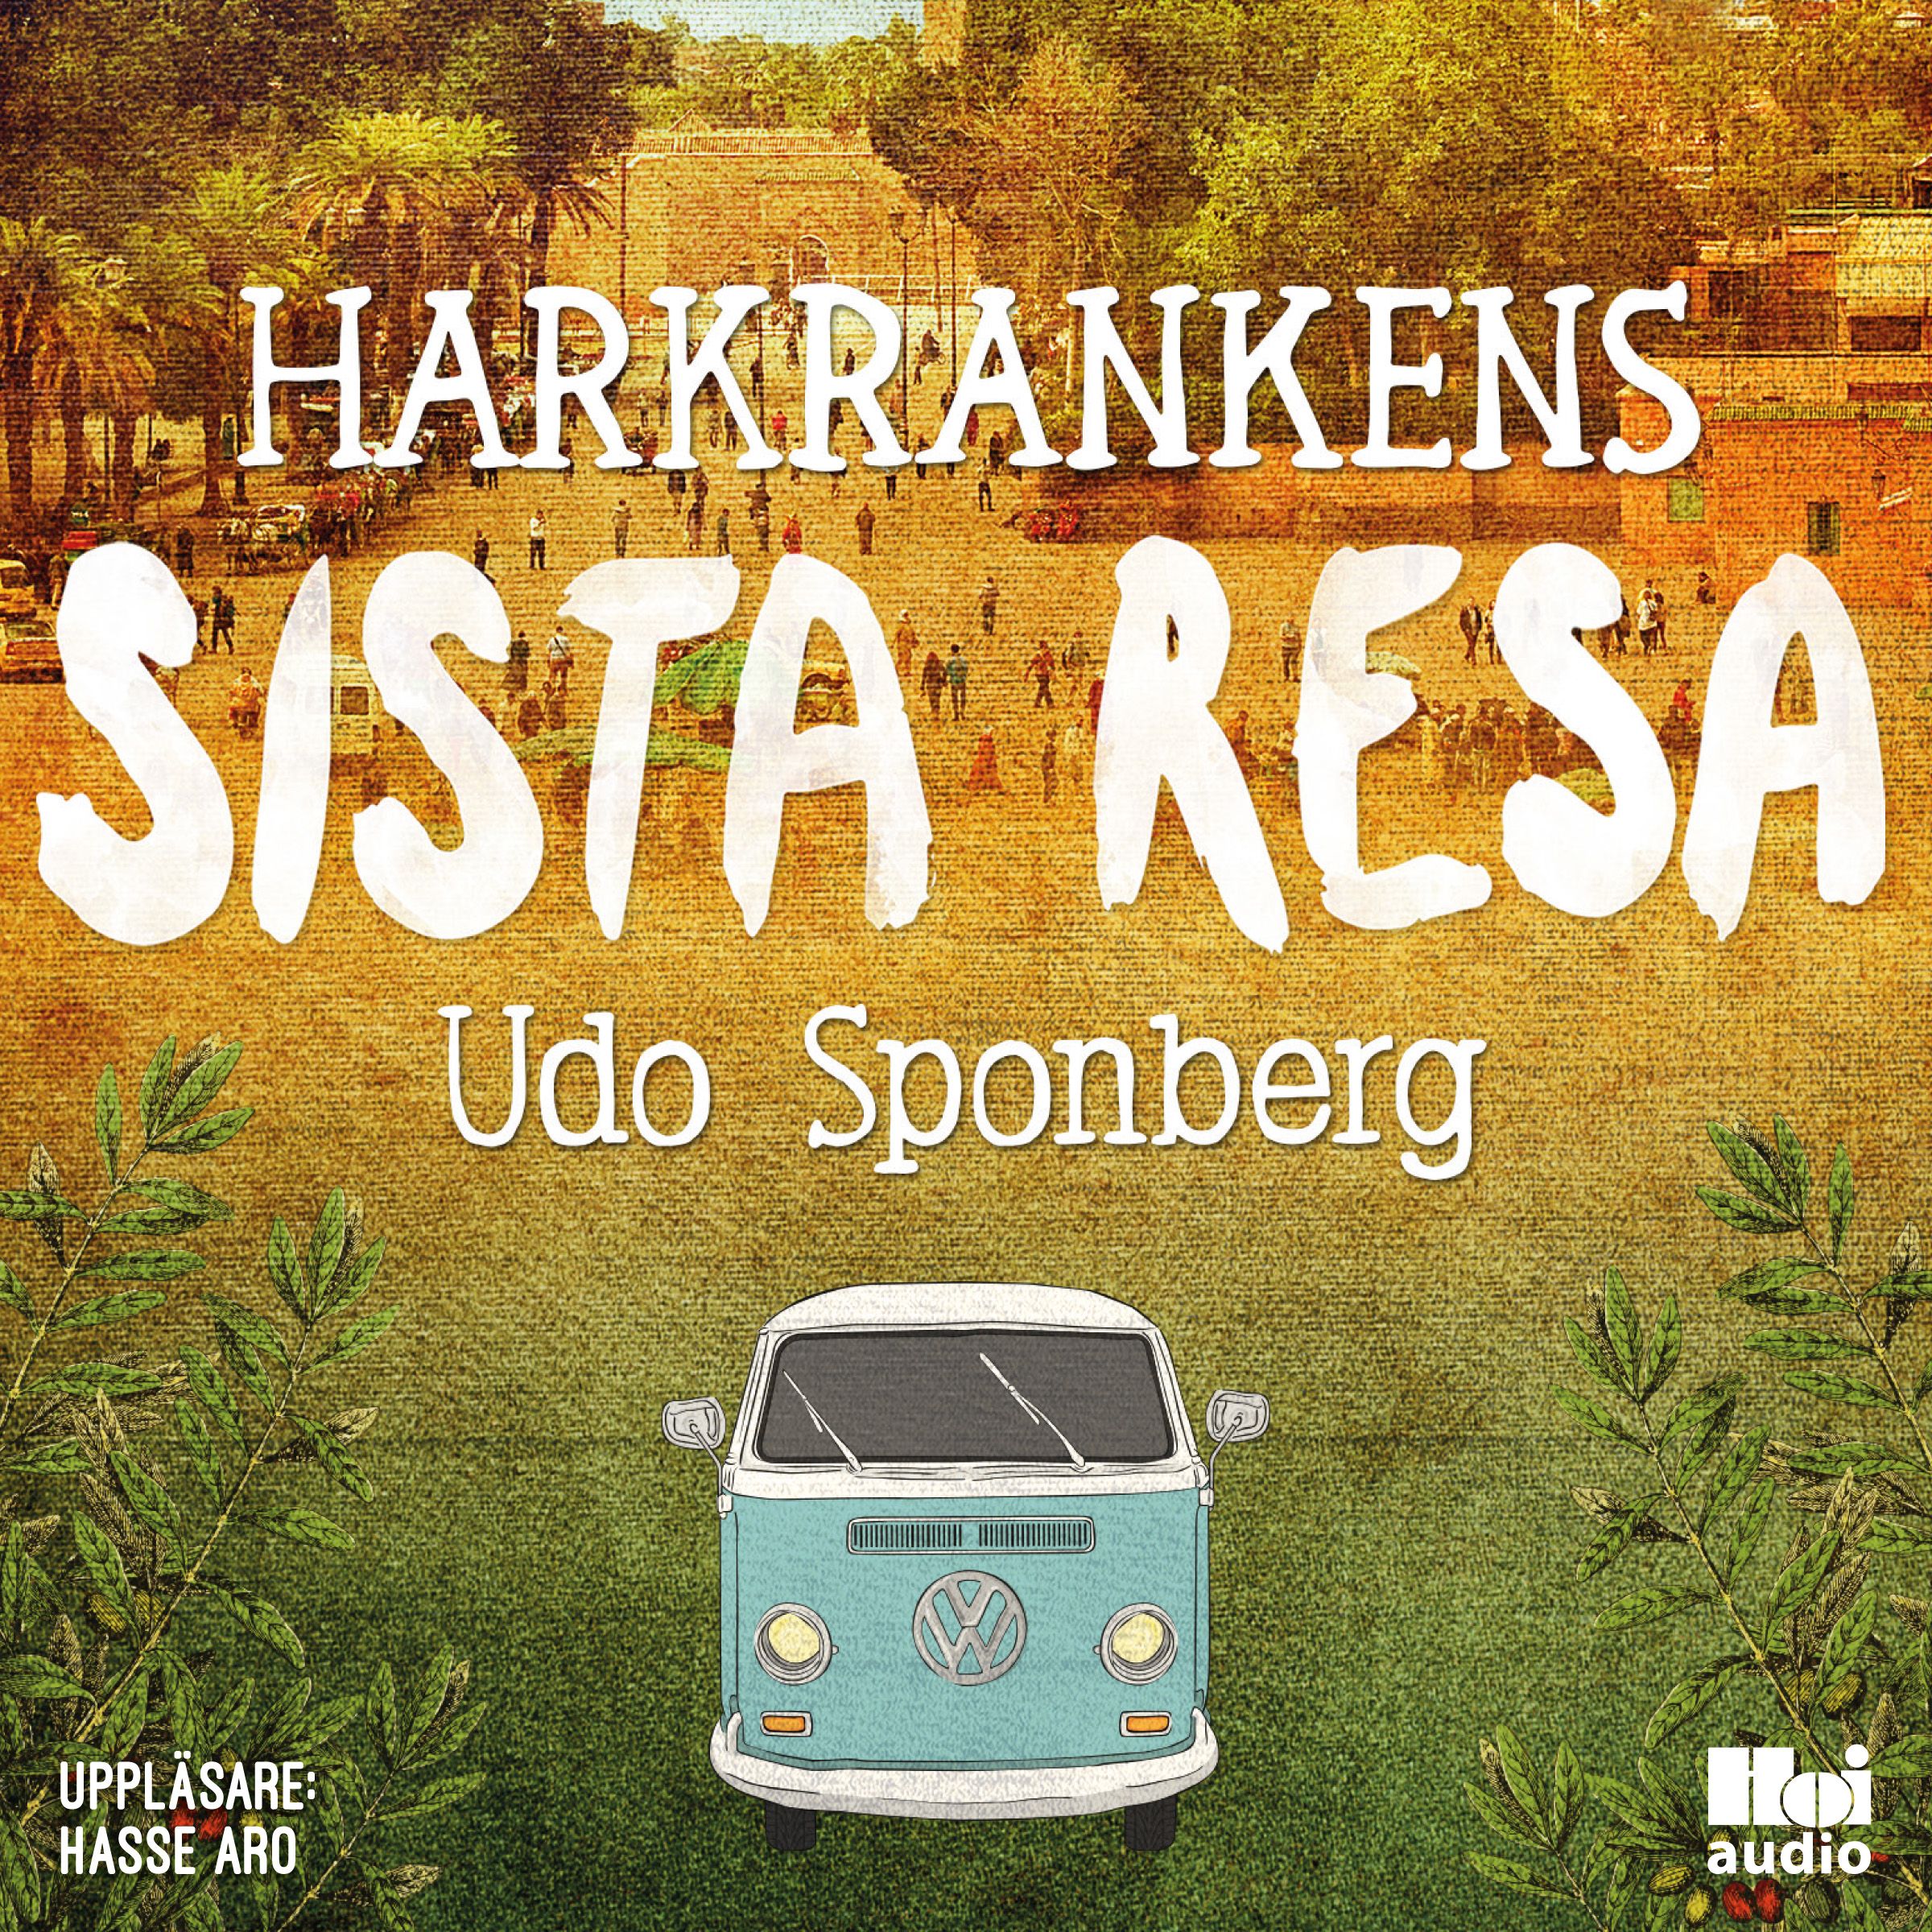 Harkrankens sista resa, audiobook by Udo Sponberg